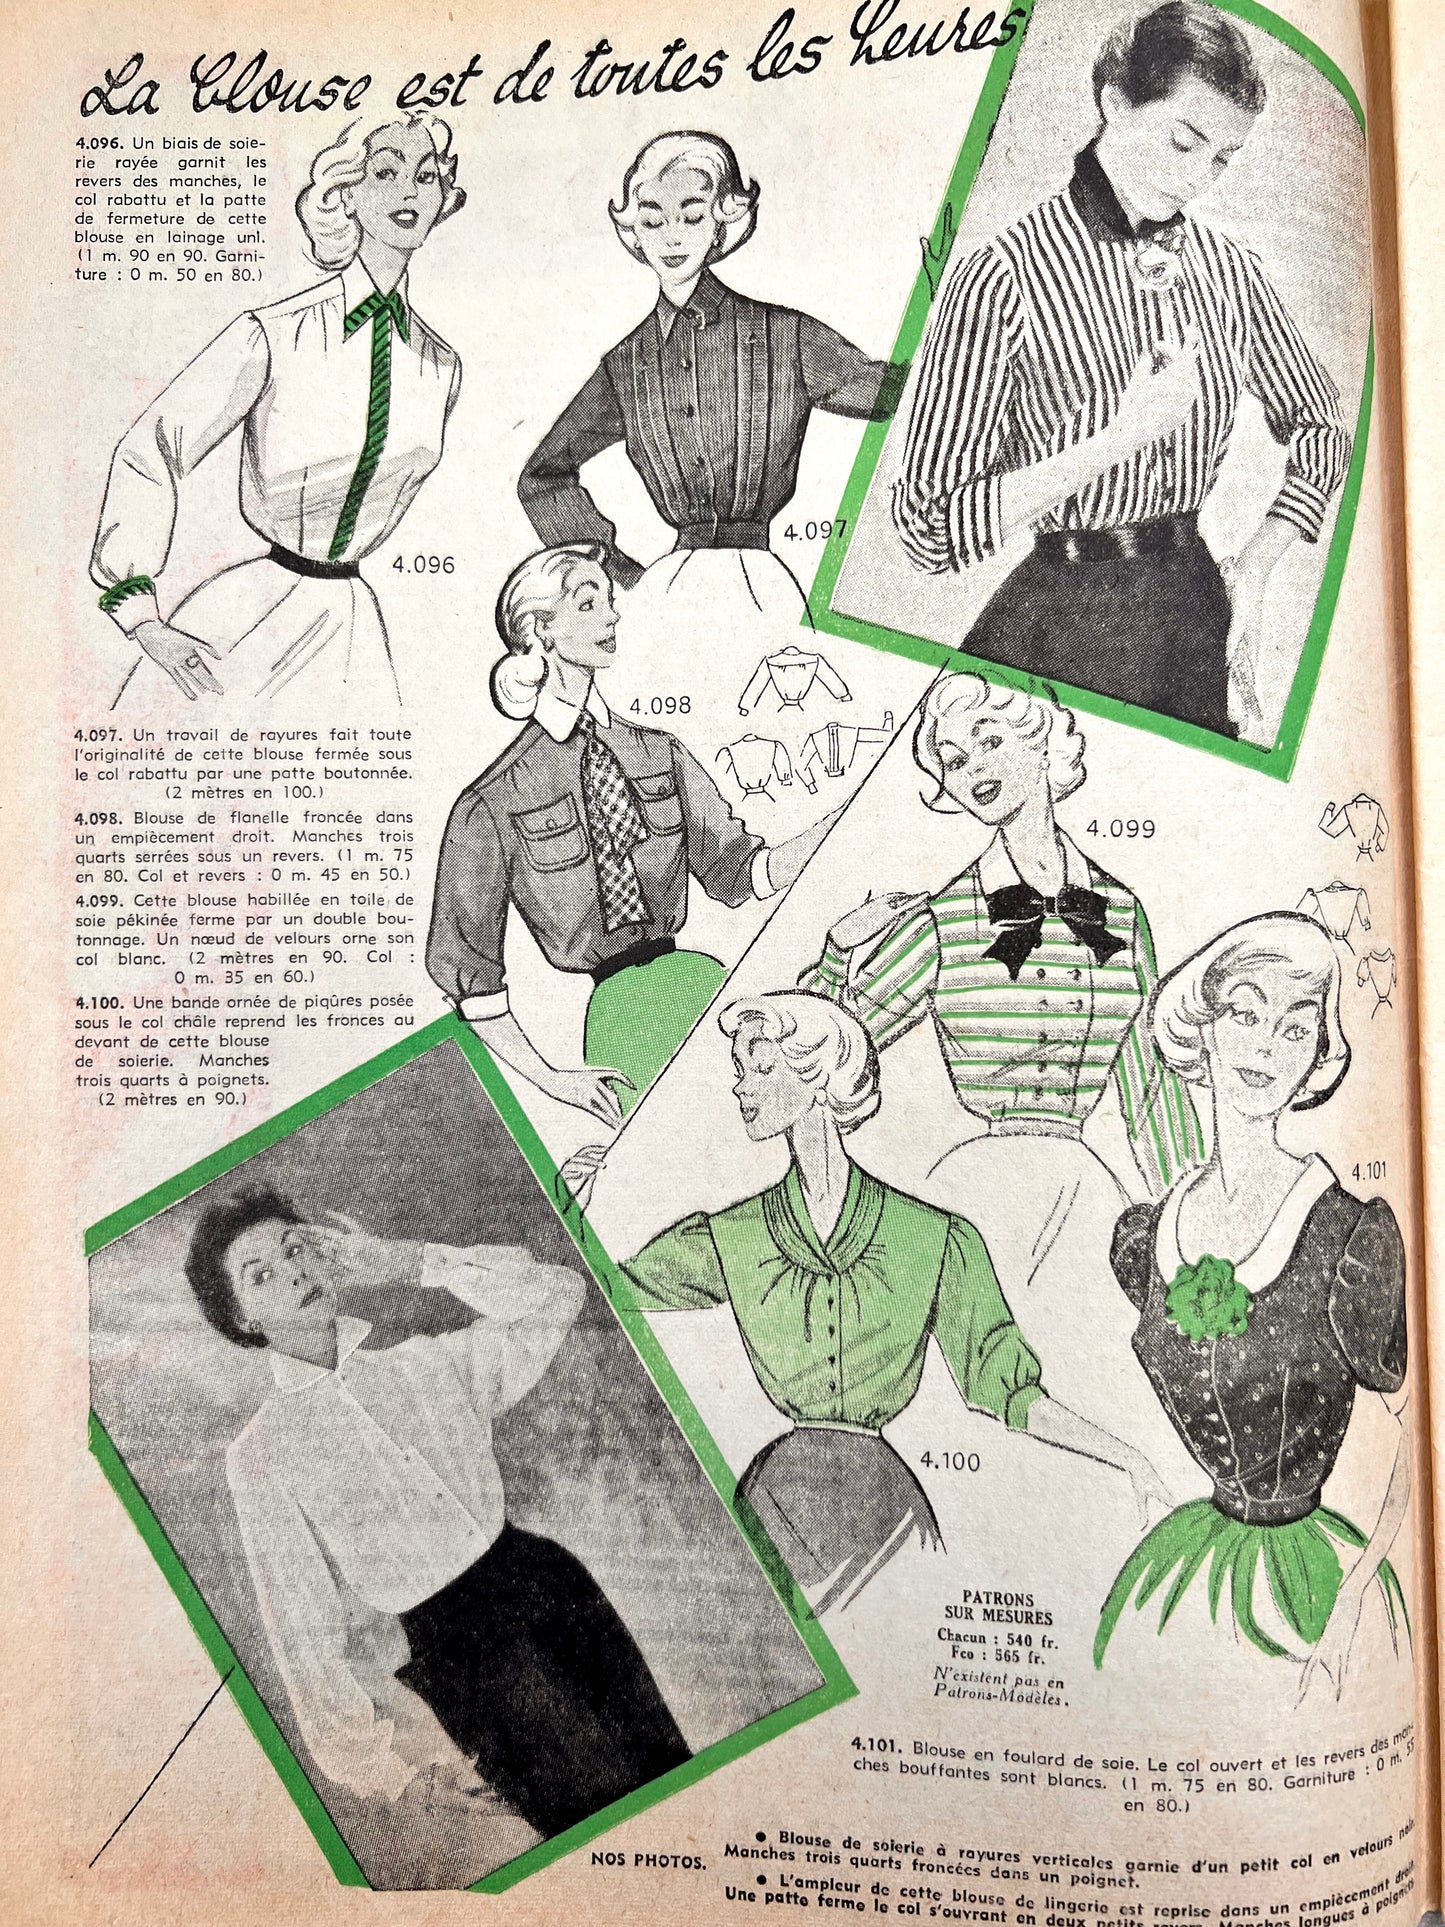 September 1954 French Fashion Paper Le Petit Echo de la Mode